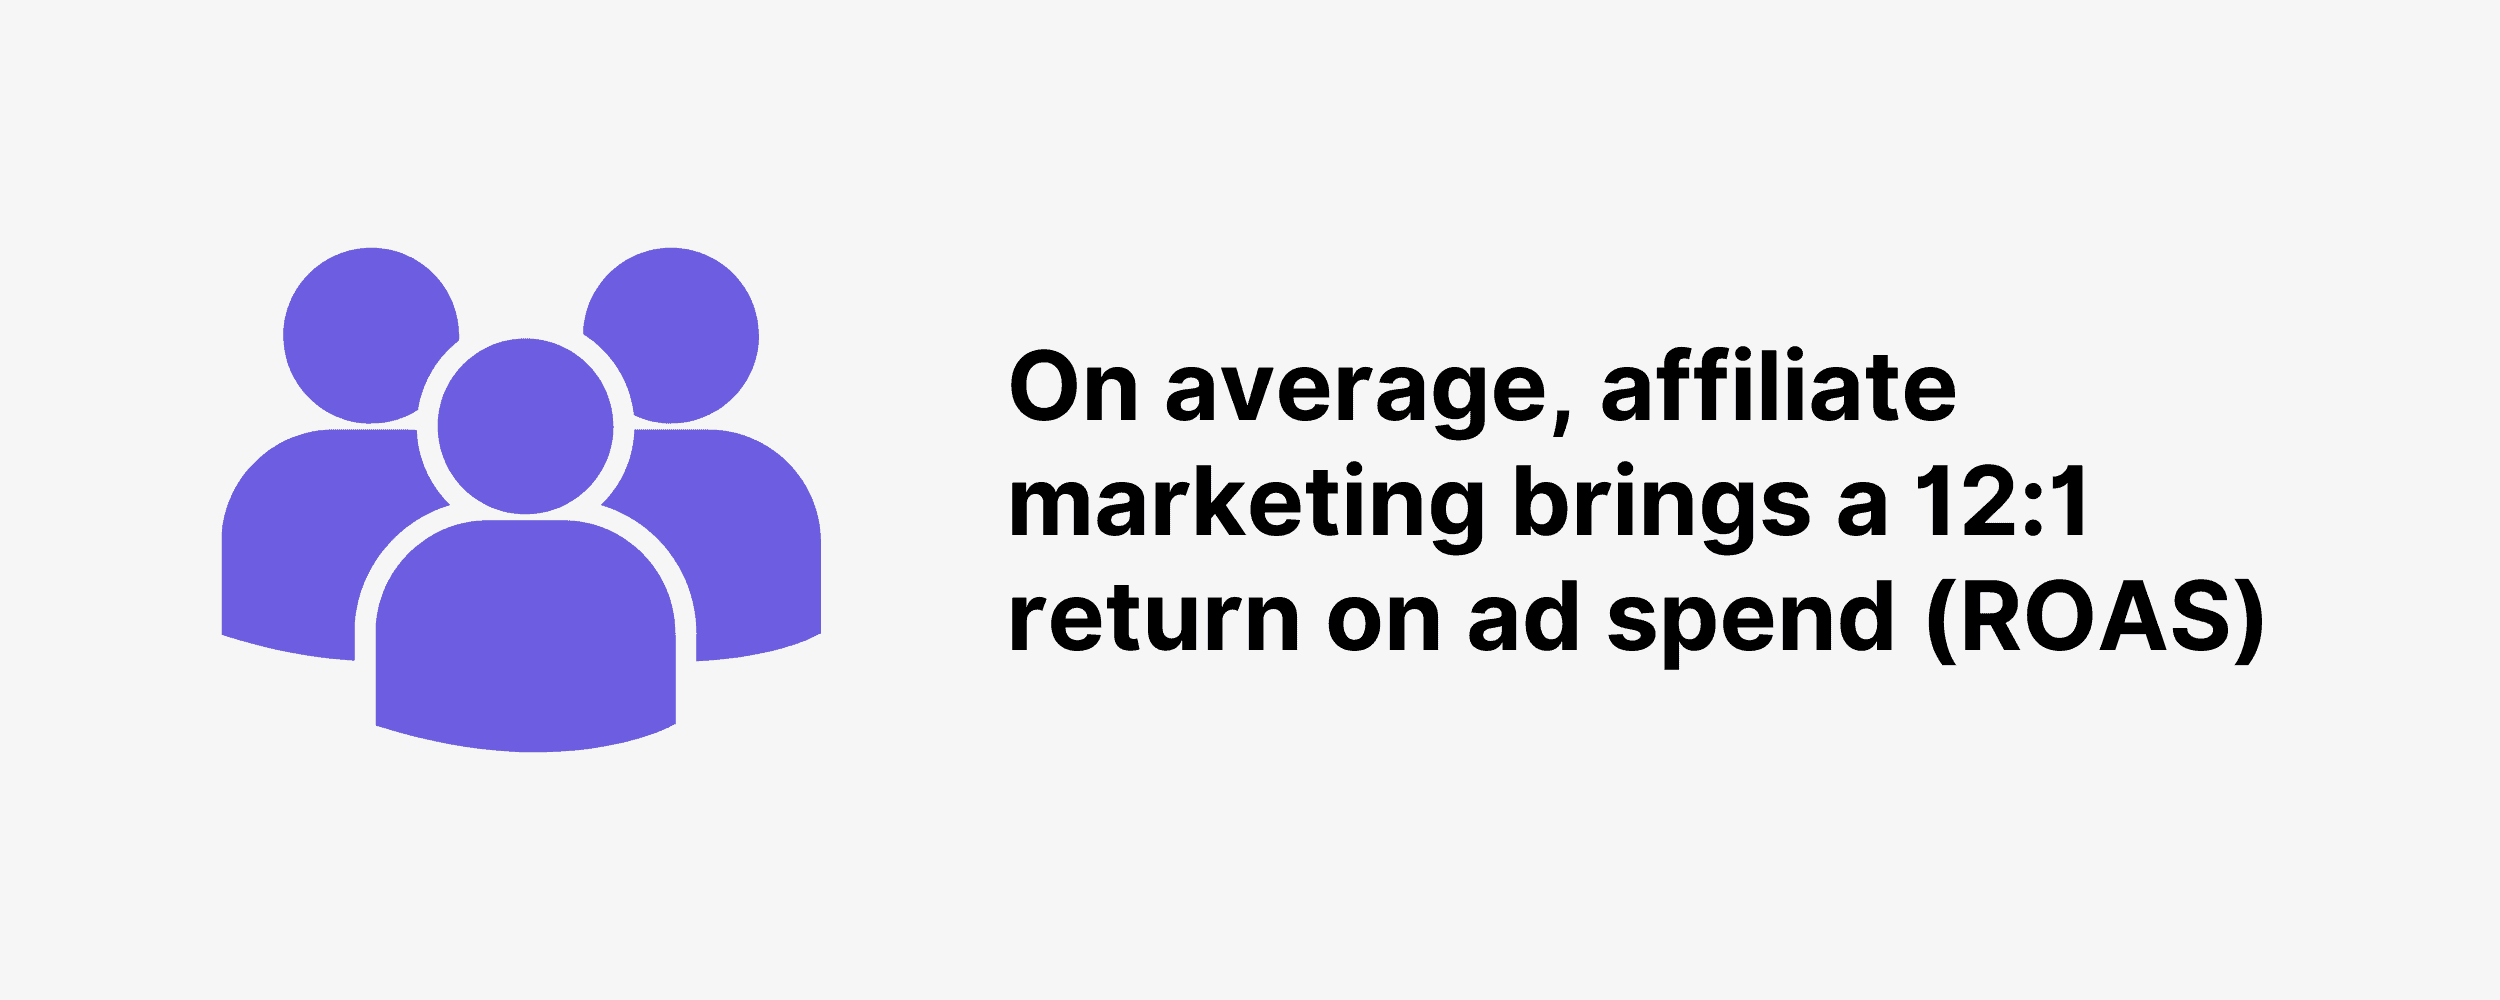 On average, affiliate marketing brings a 12:1 return on ad spend (ROAS)